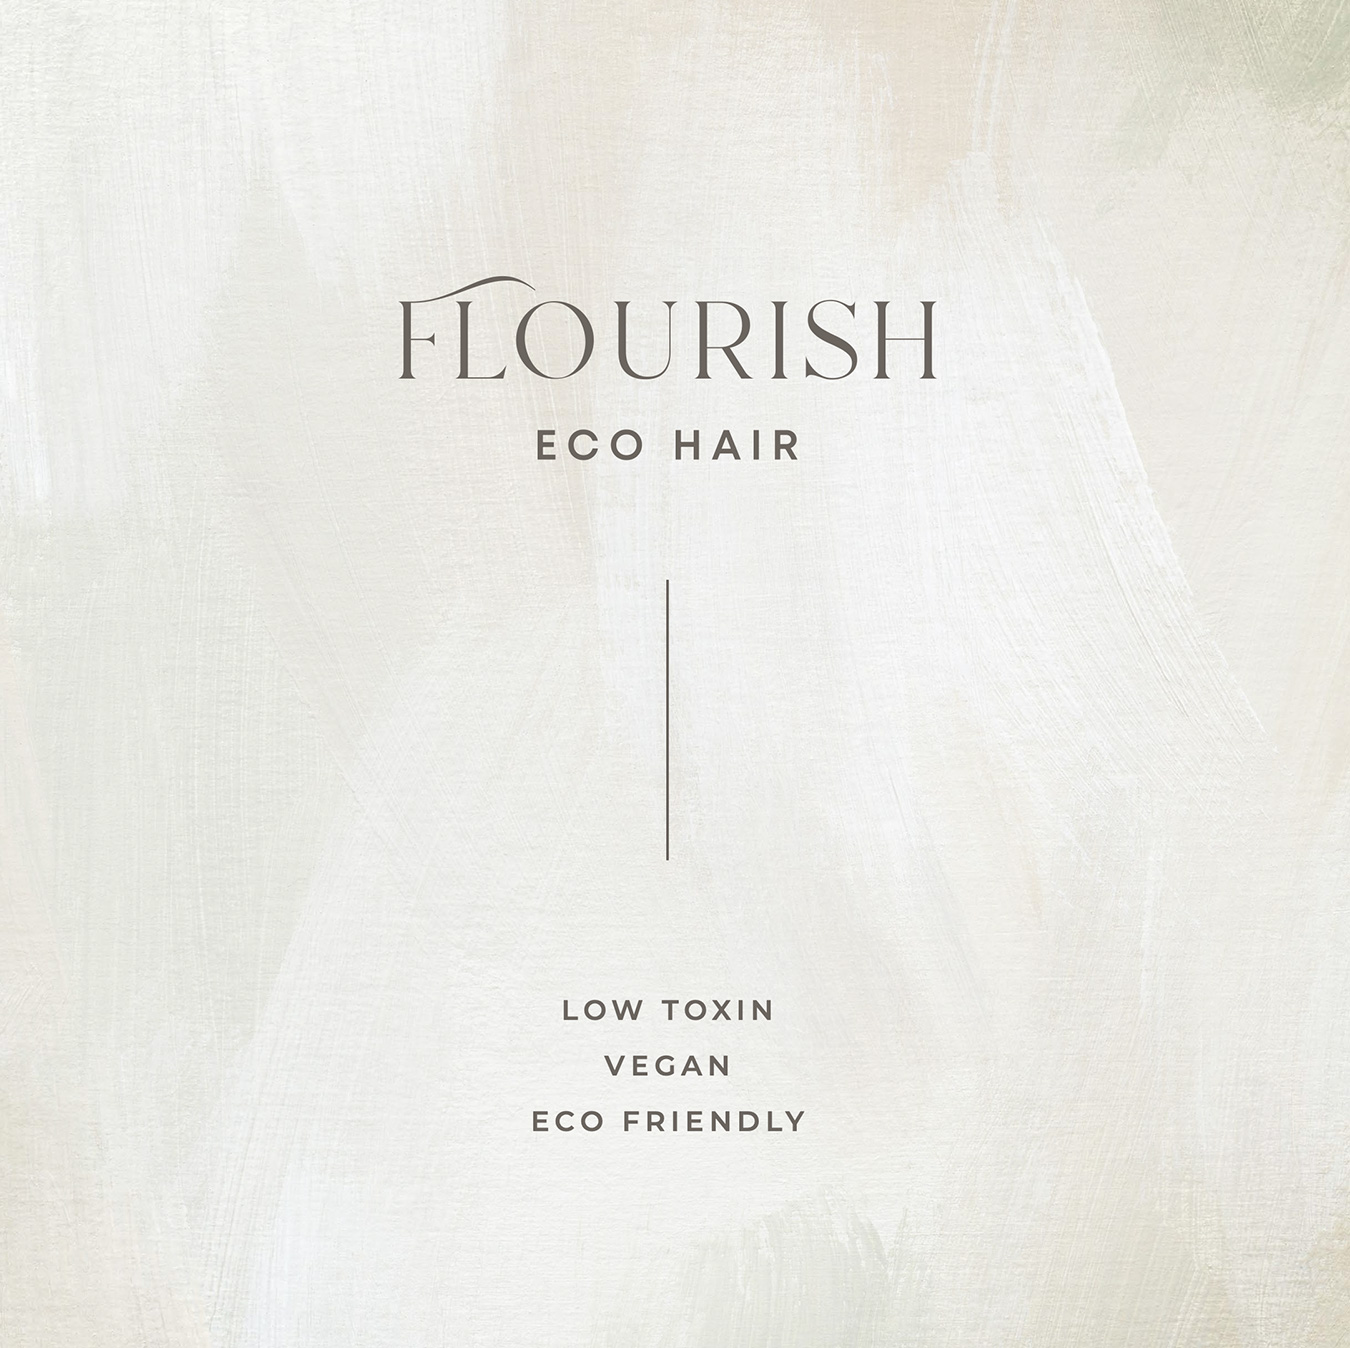 Flourish Eco Hair Brand Development and Graphic Design by TL Design Co.